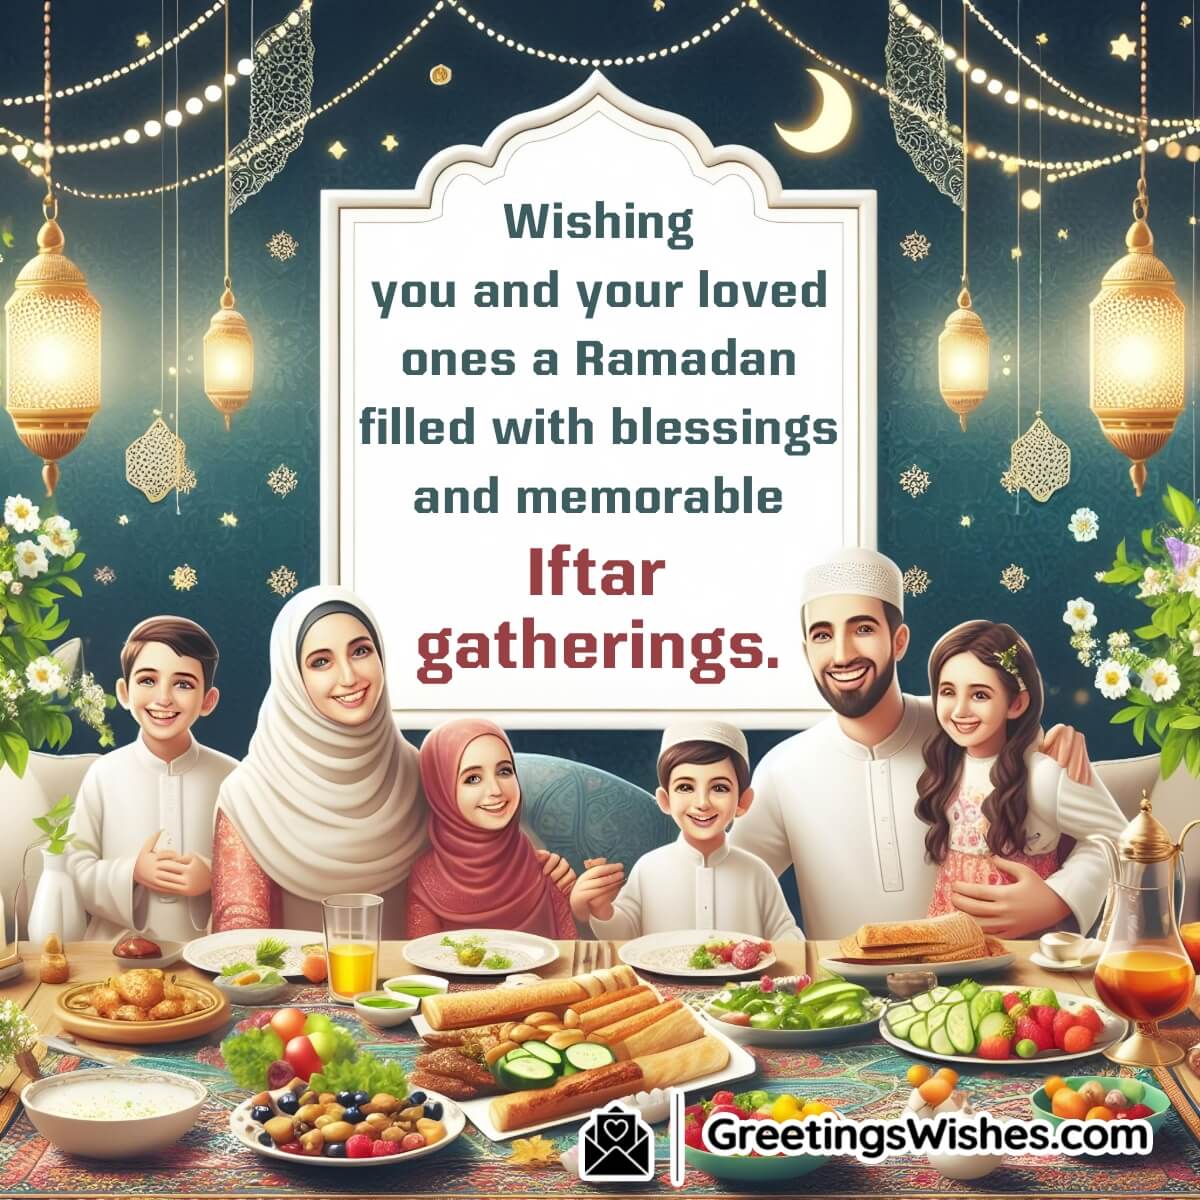 Iftar Blessings For Loved Ones